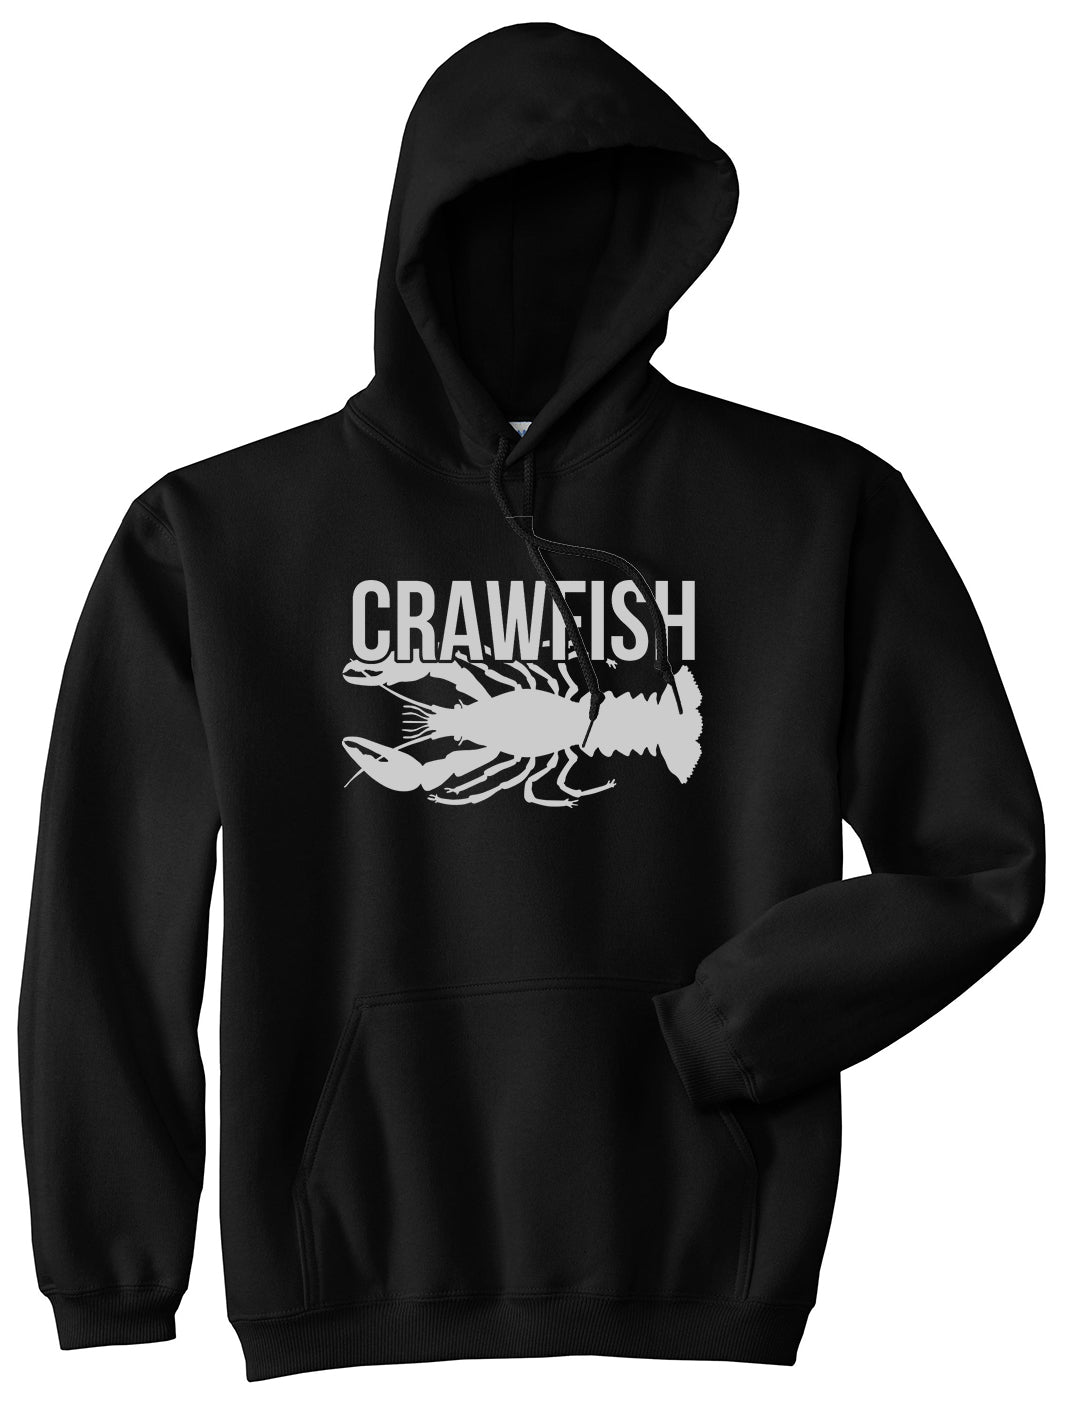 Crawfish Black Pullover Hoodie by Kings Of NY